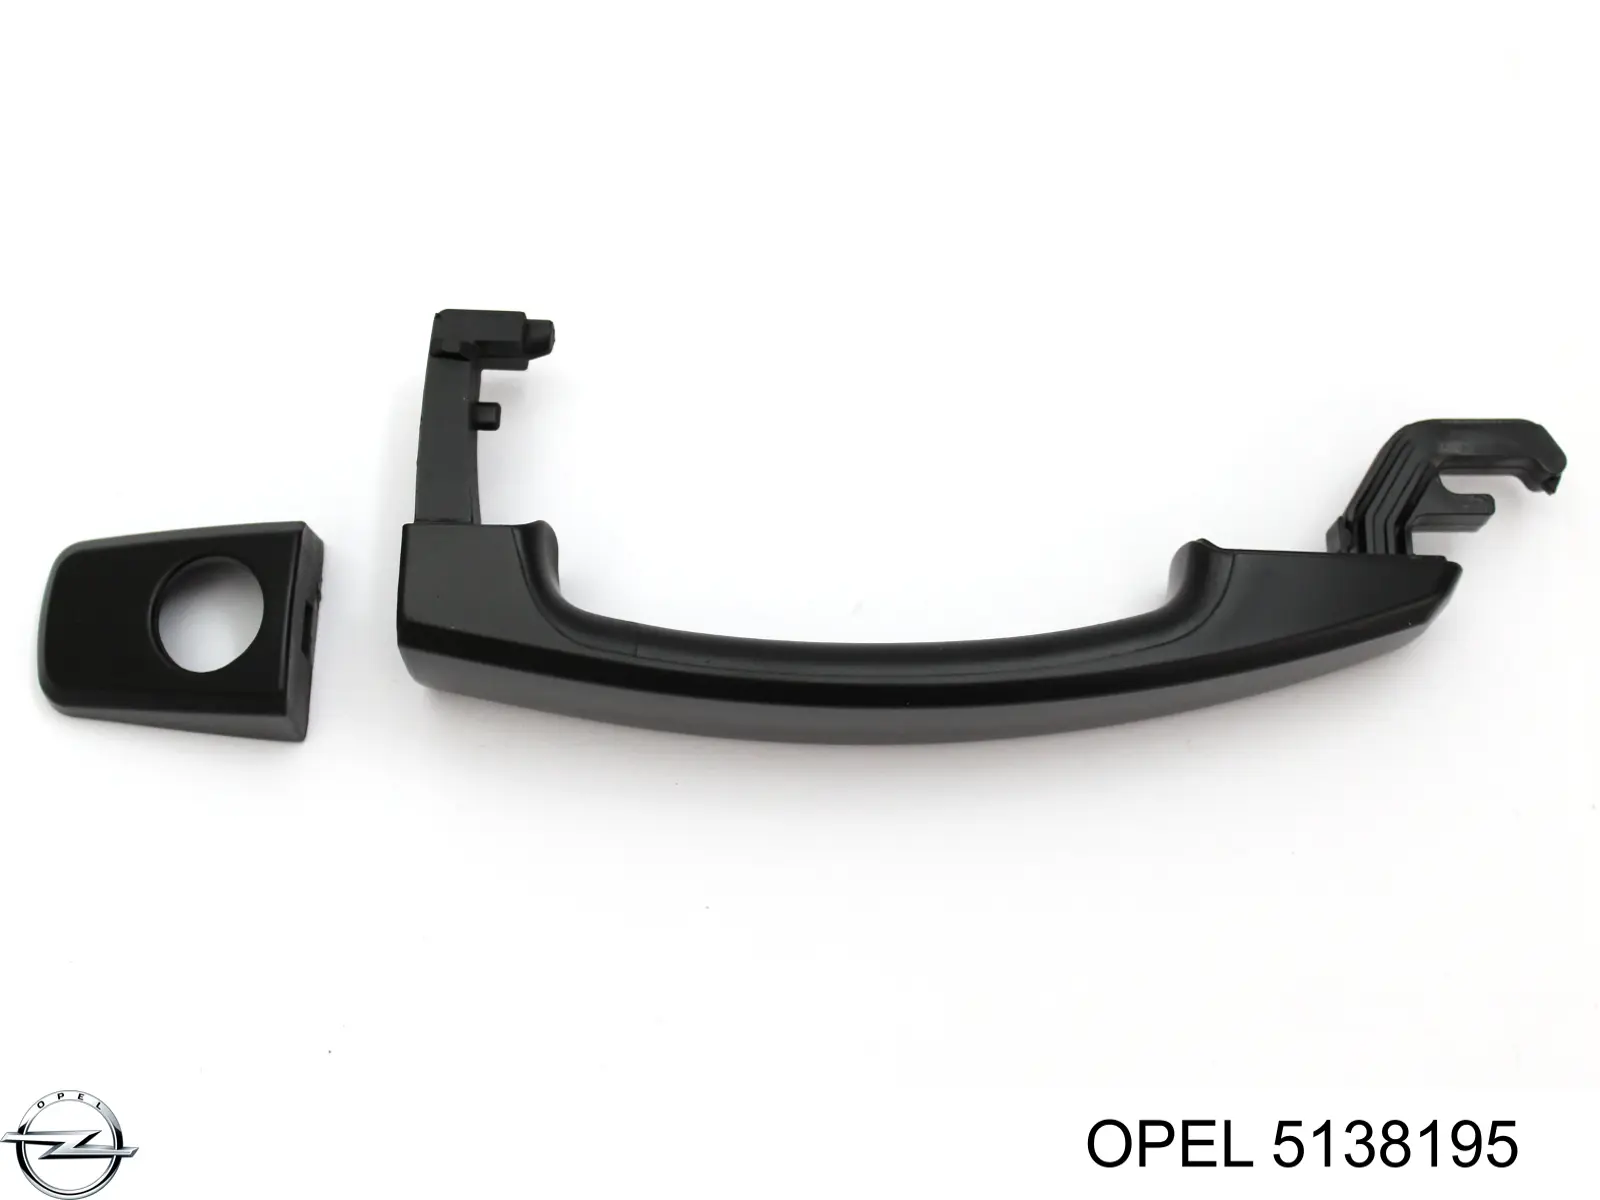 5138195 Opel maçaneta externa da porta dianteira